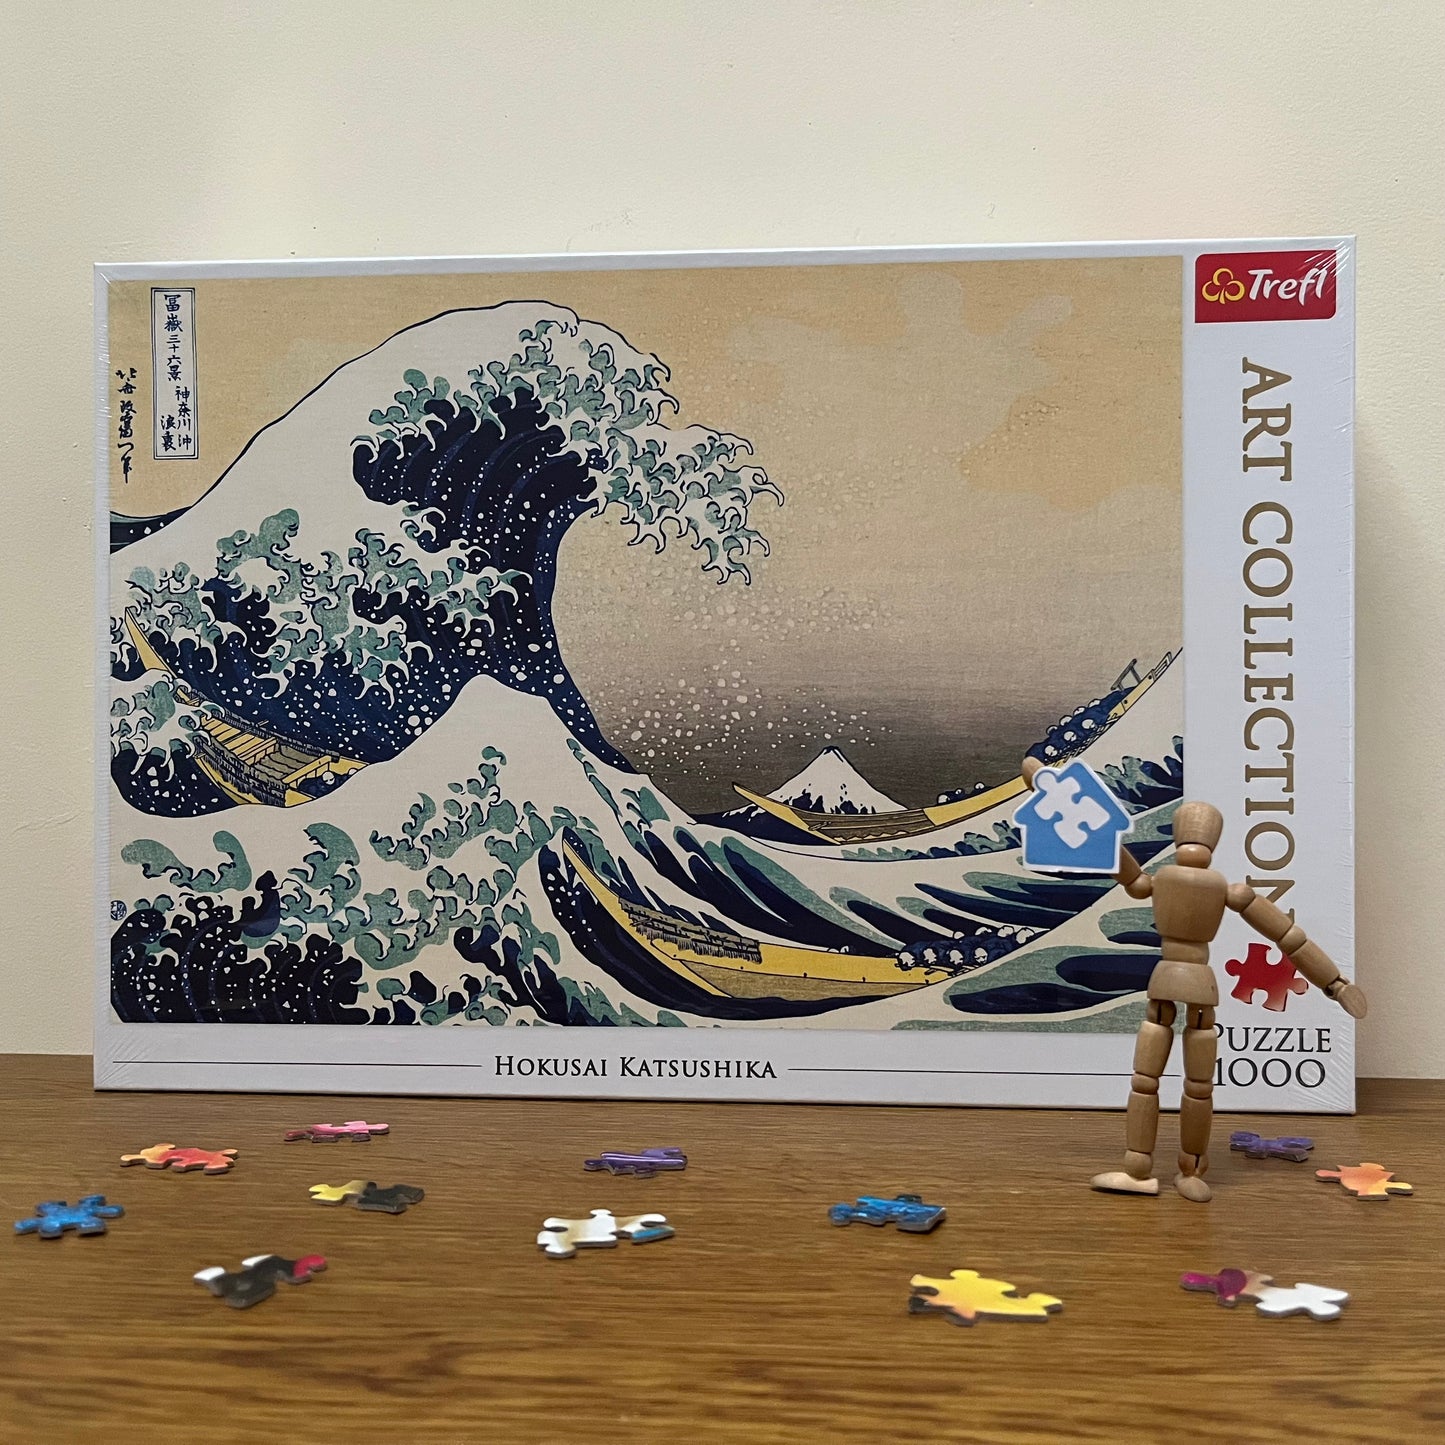 La gran ola - Hokusai Katsushika